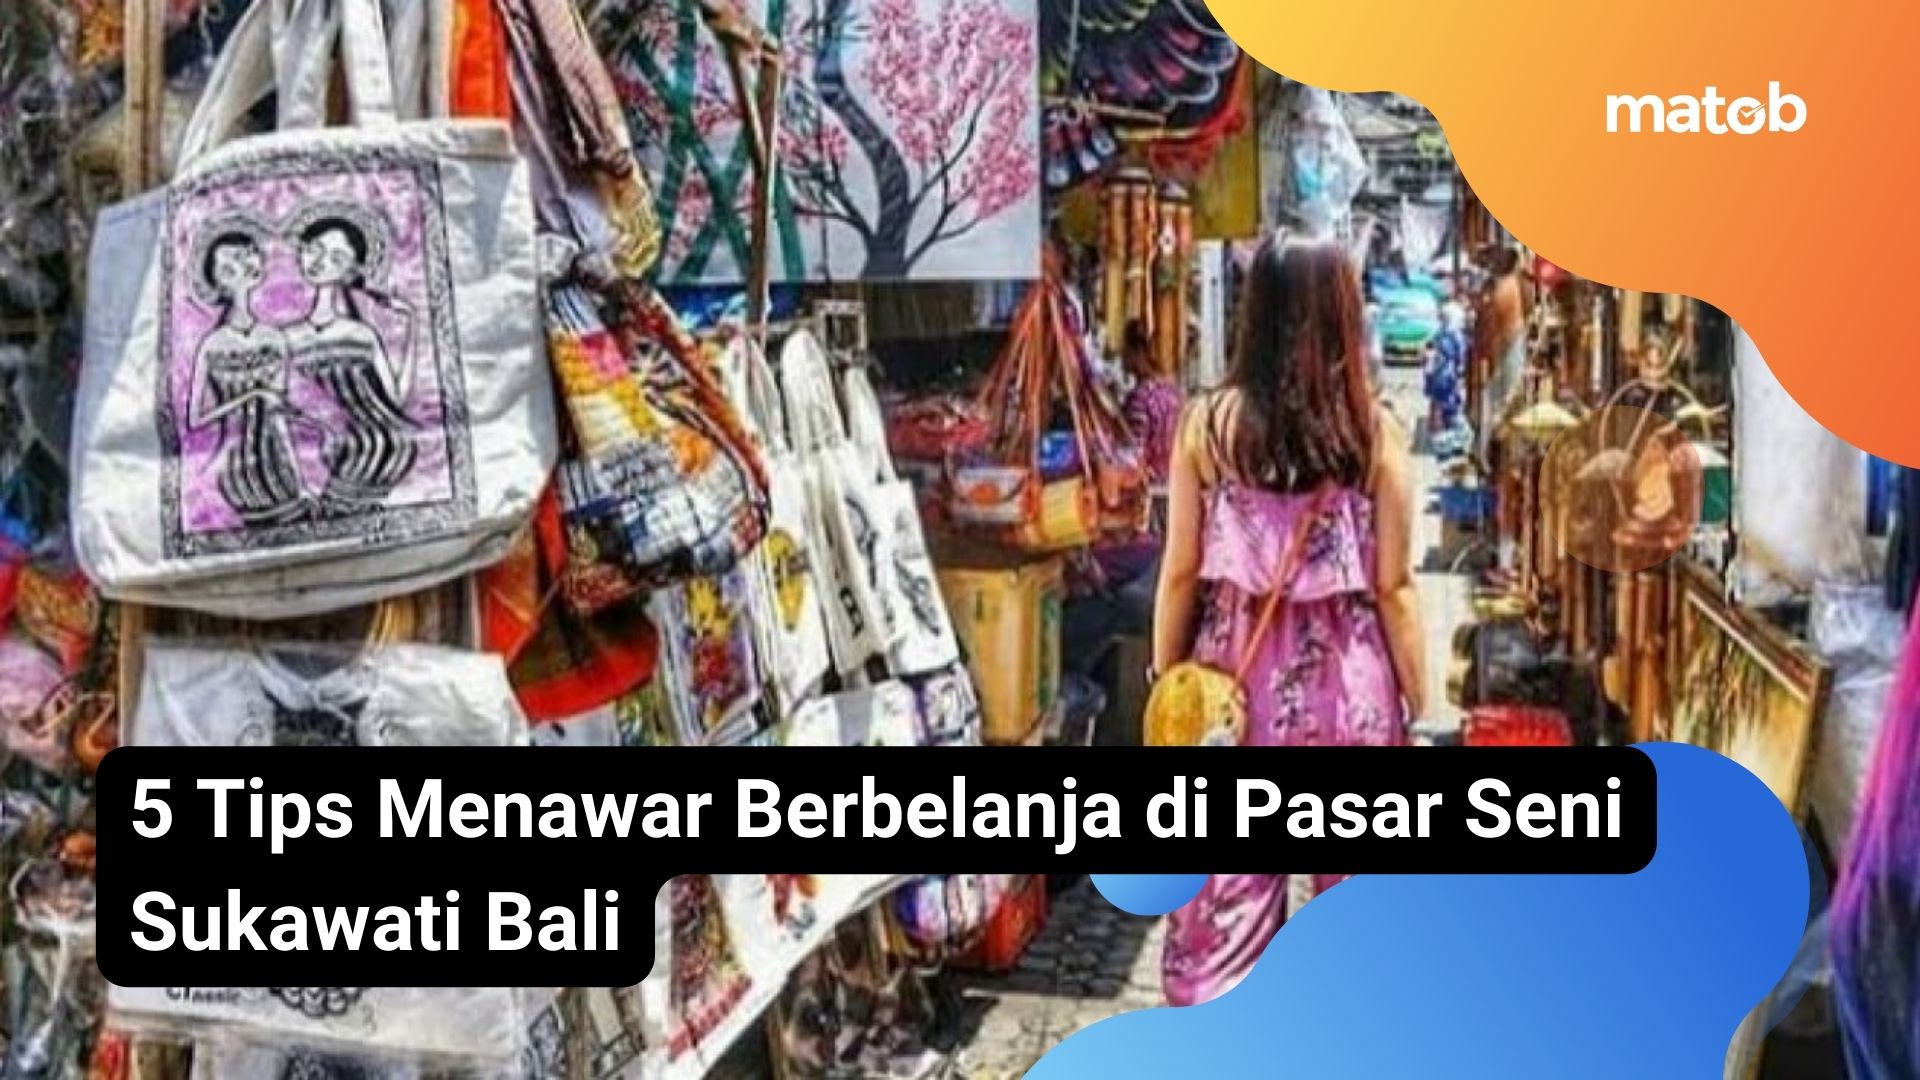 5 Tips Menawar Berbelanja di Pasar Seni Sukawati Bali